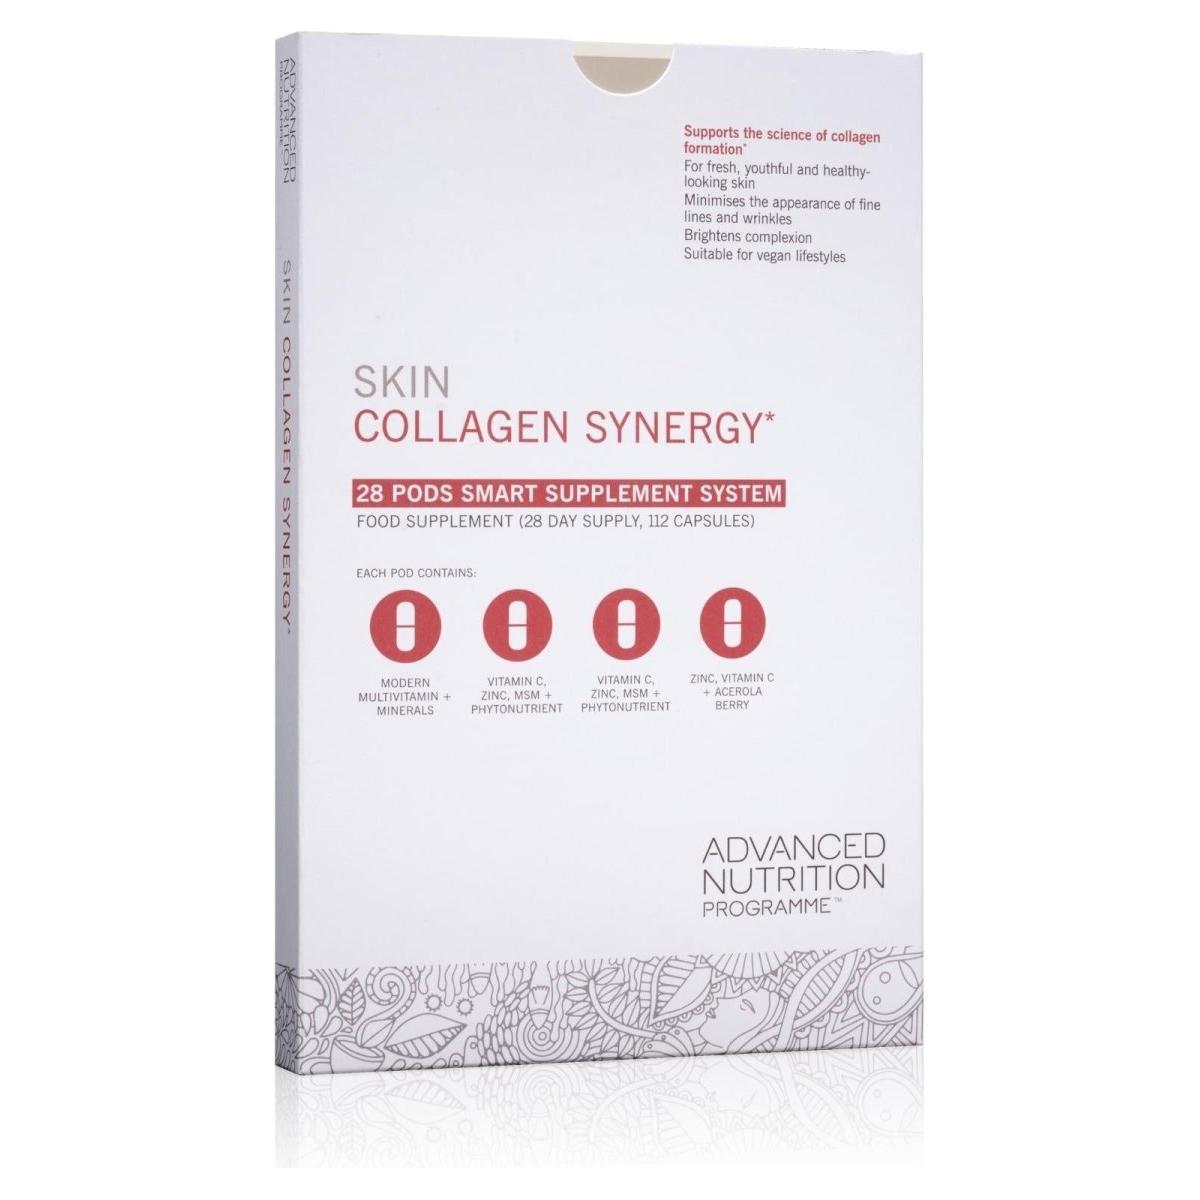 Advanced Nutrition Programme | Skin Collagen Synergy | 28 Day Supply - DG International Ventures Limited